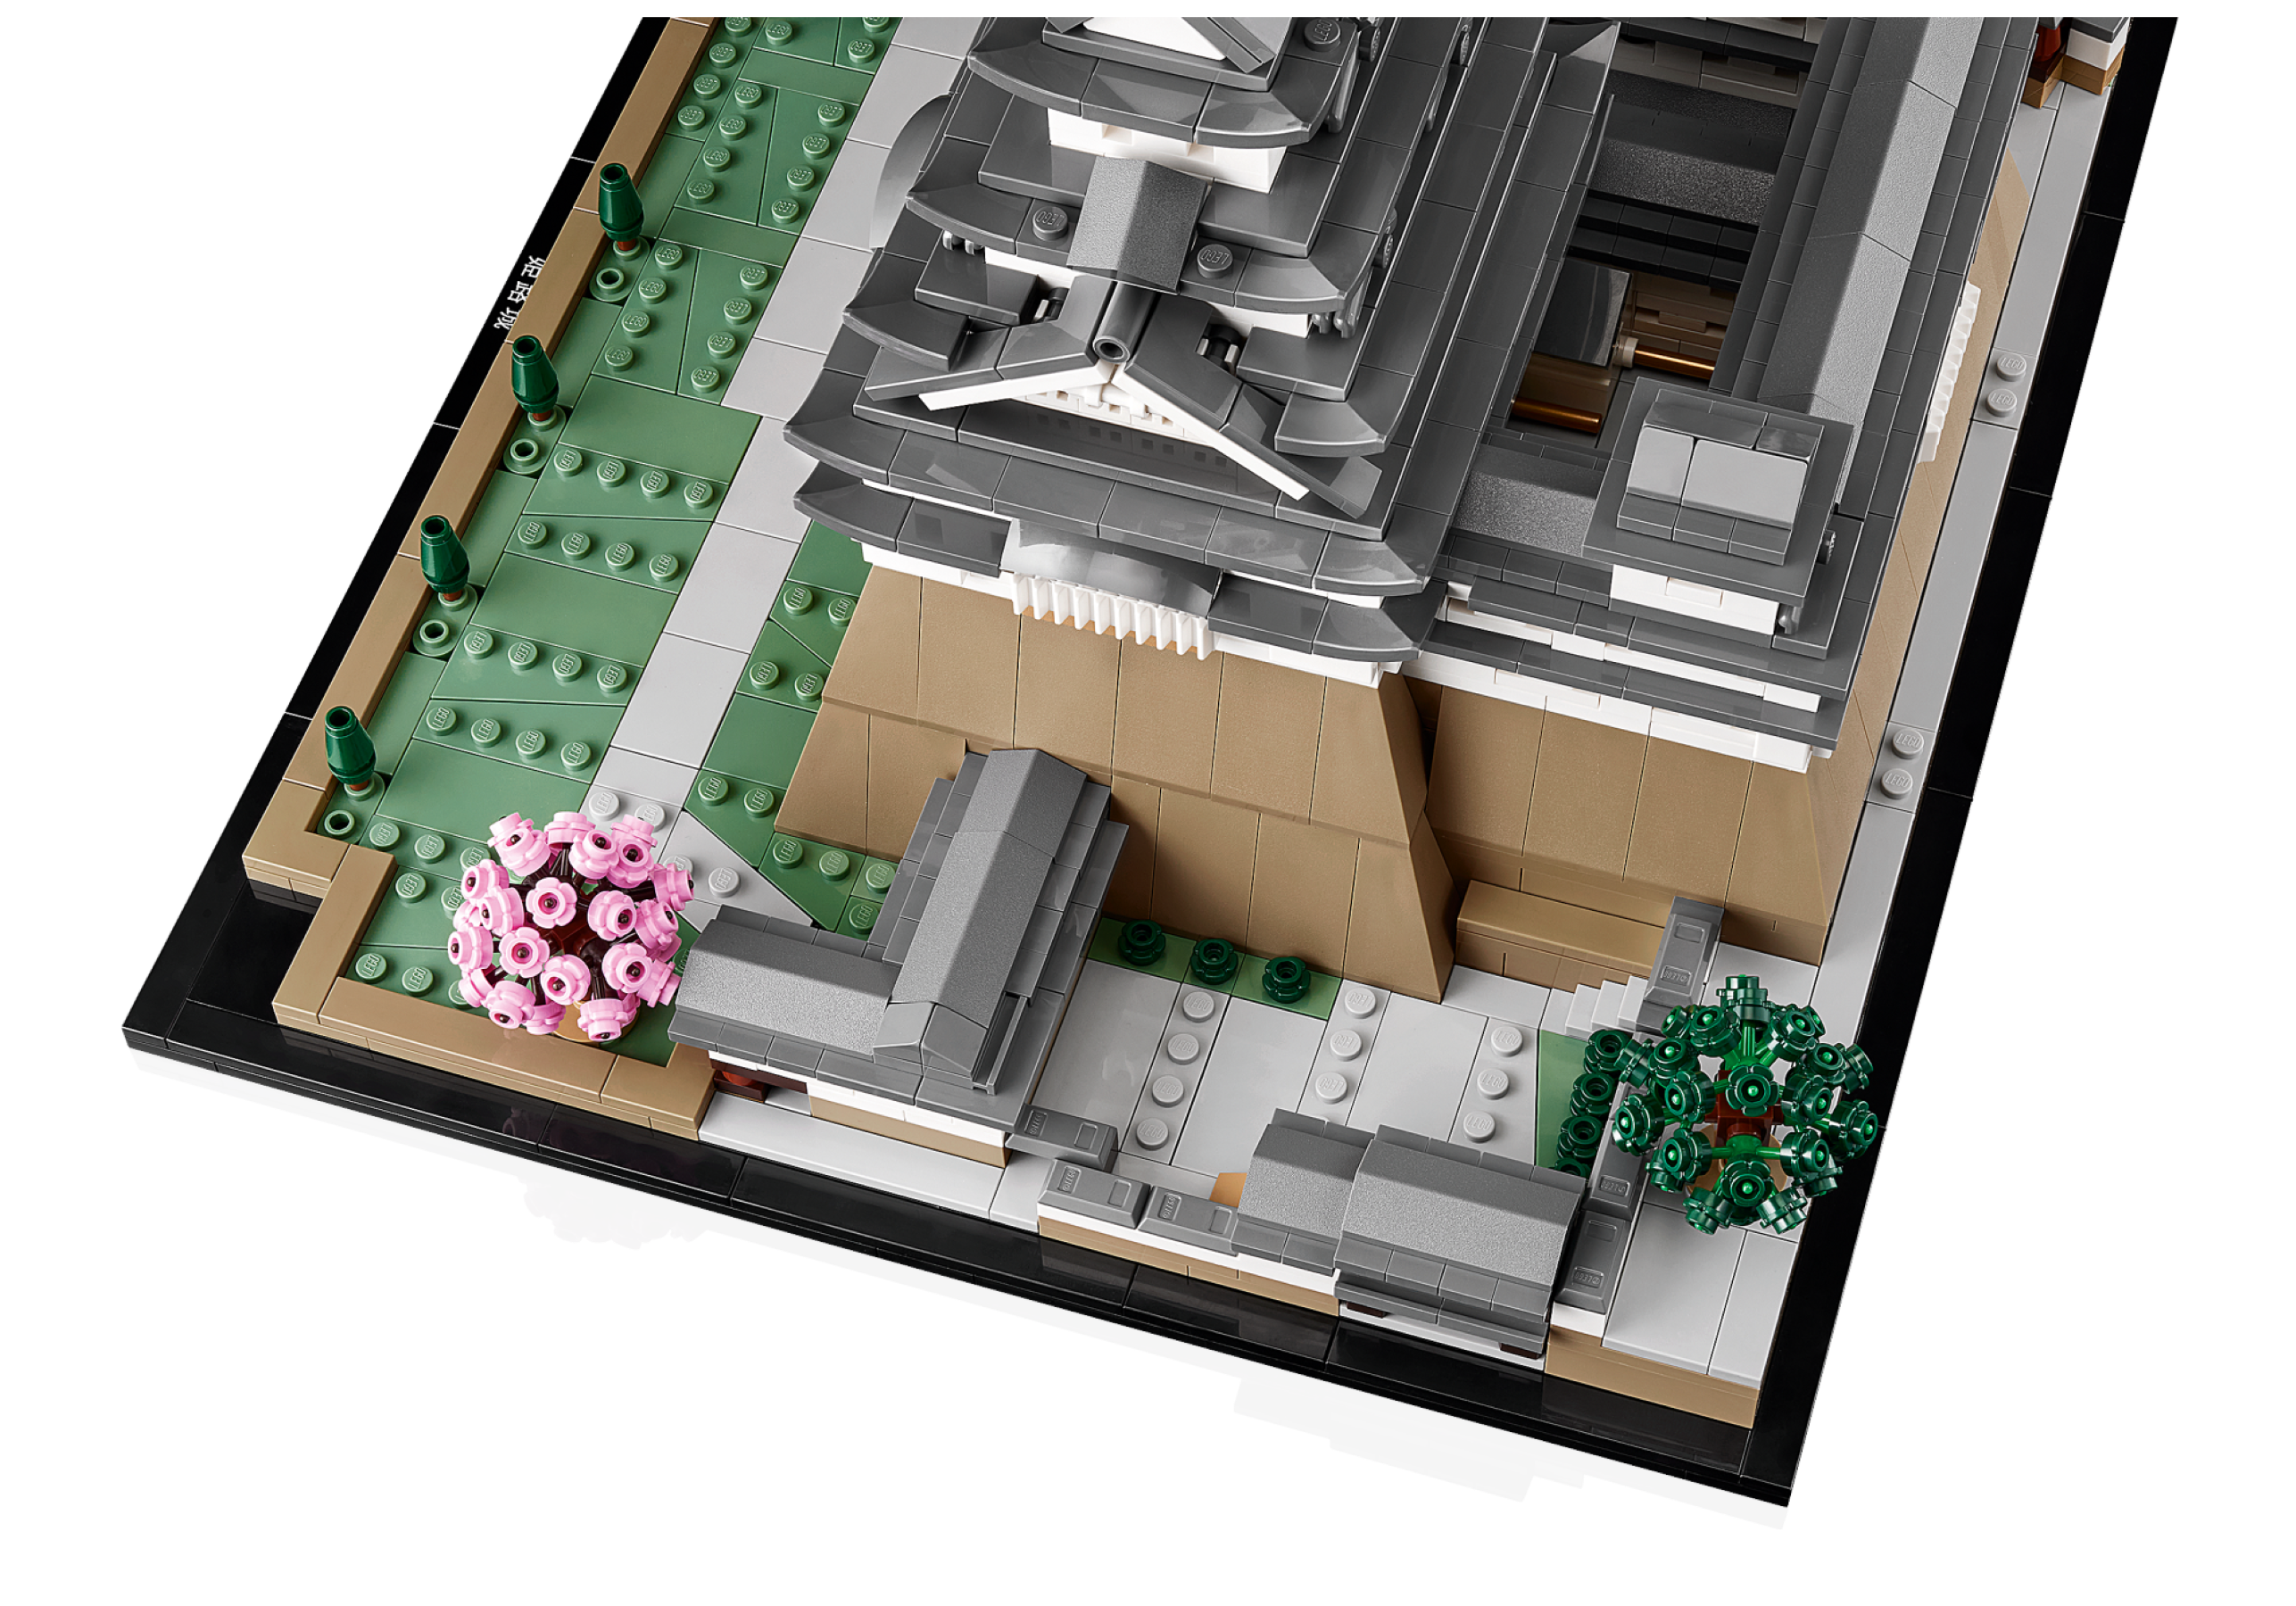 Lego Architecture Himeji Castle